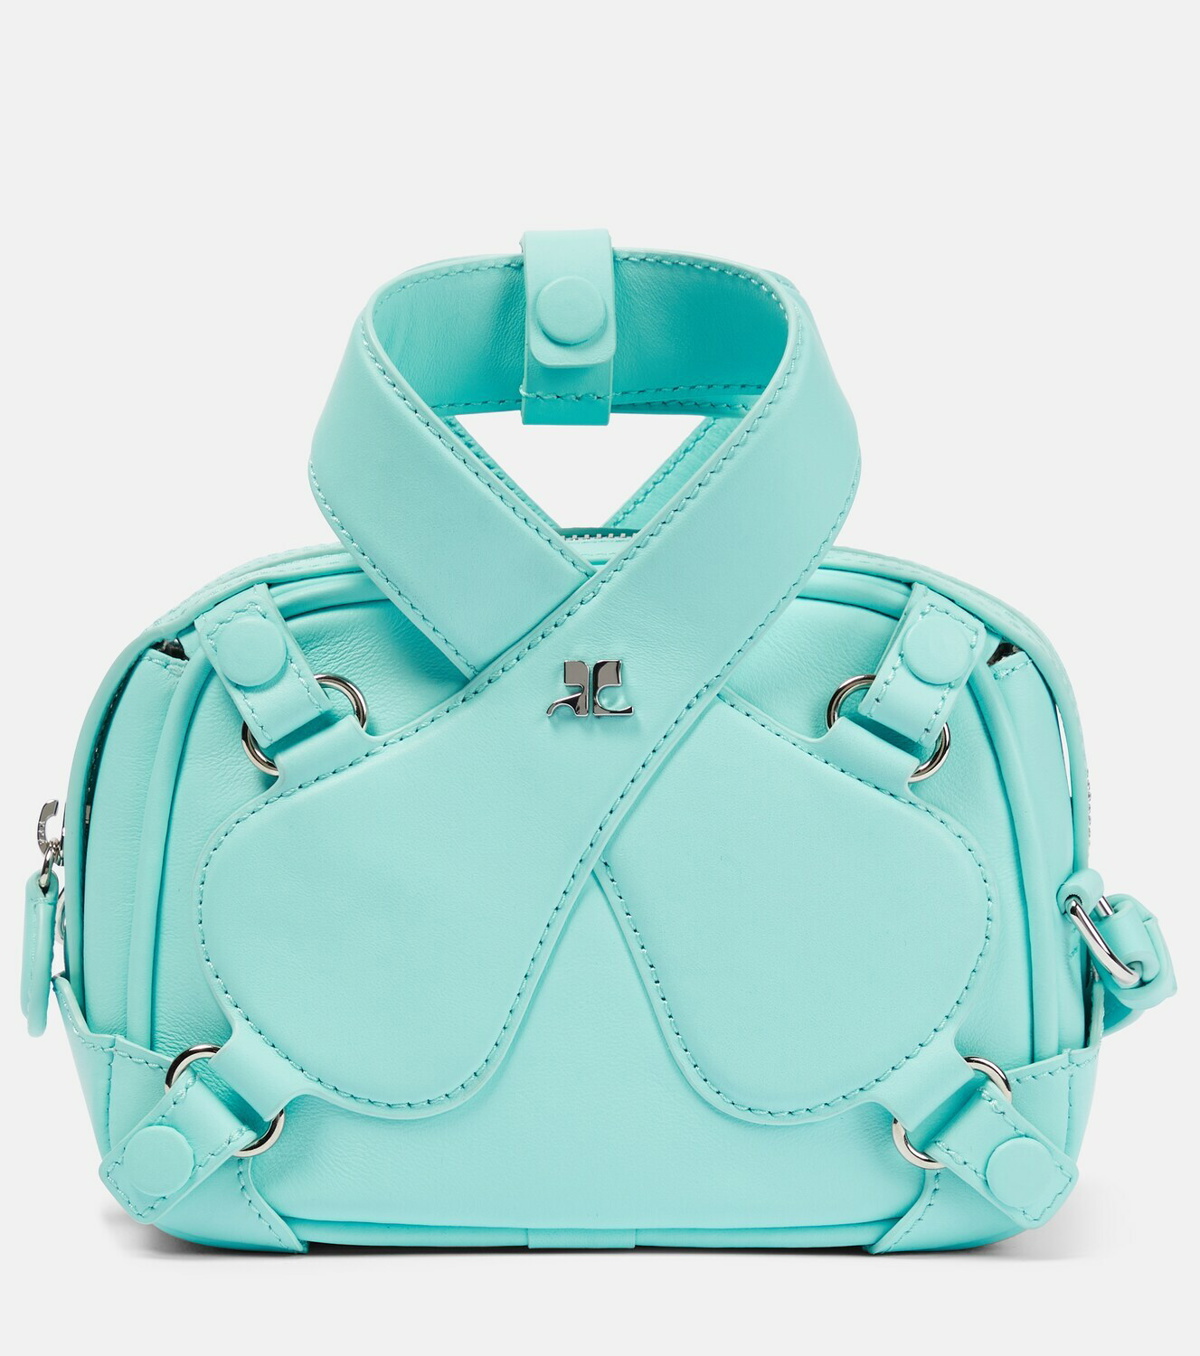 Loop Baguette Bag - Luxury Fashion Leather Blue